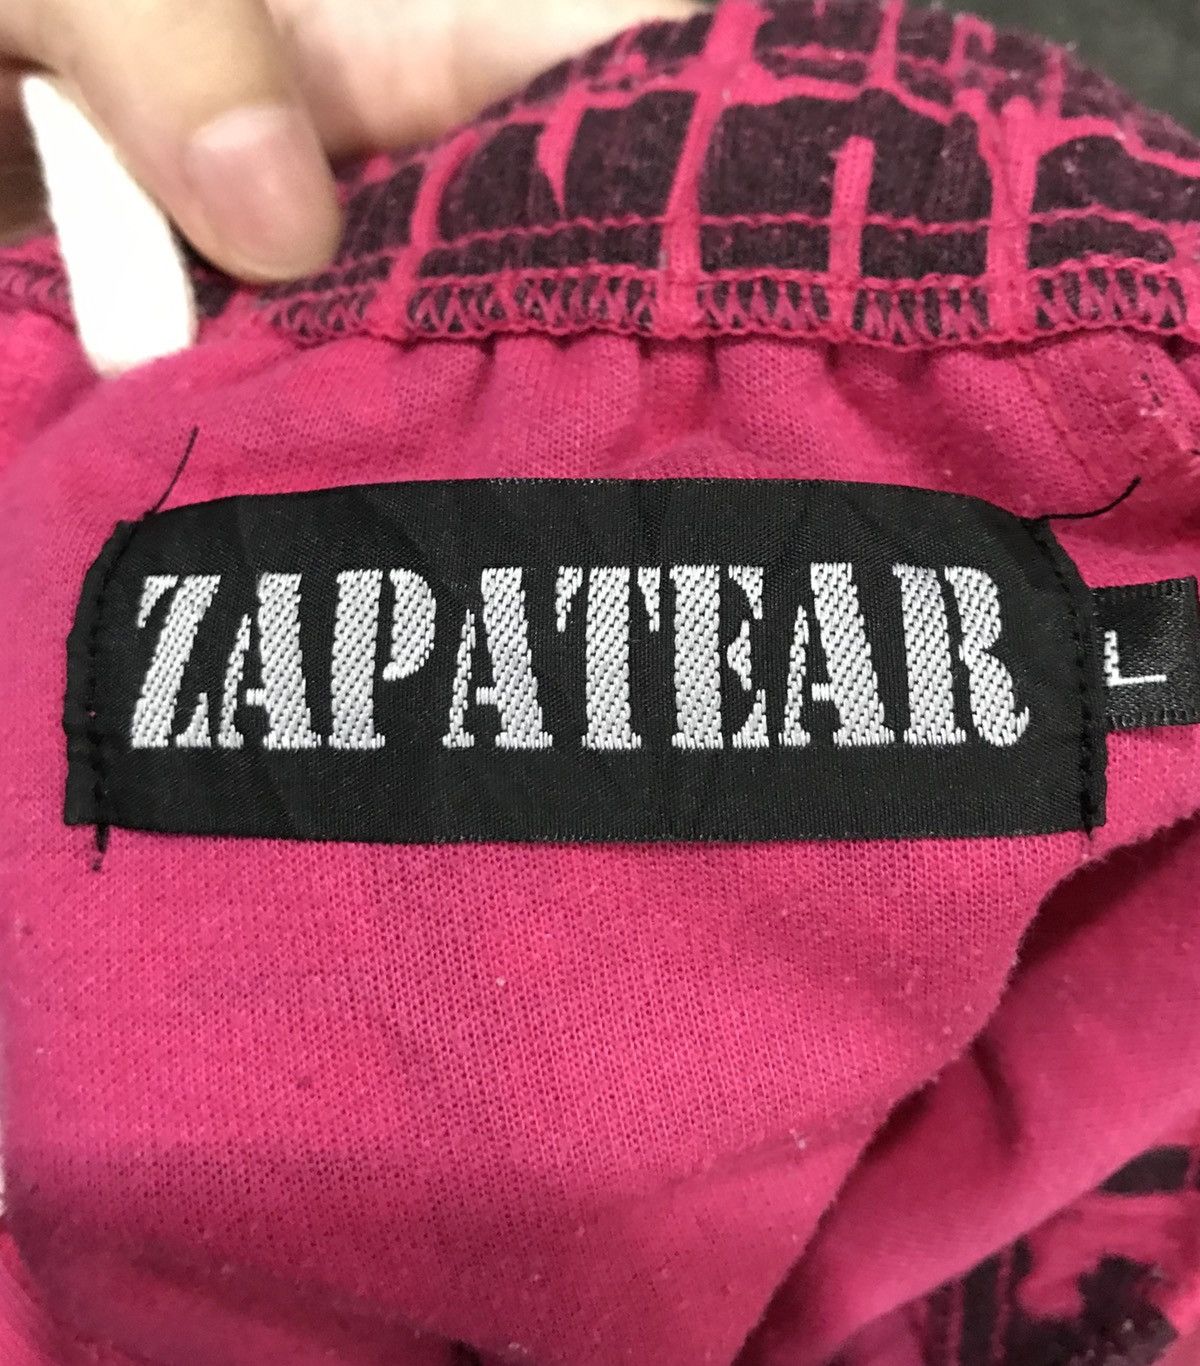 🇯🇵Japan Brand Zapatear Full Print Art Sweatpants - 6